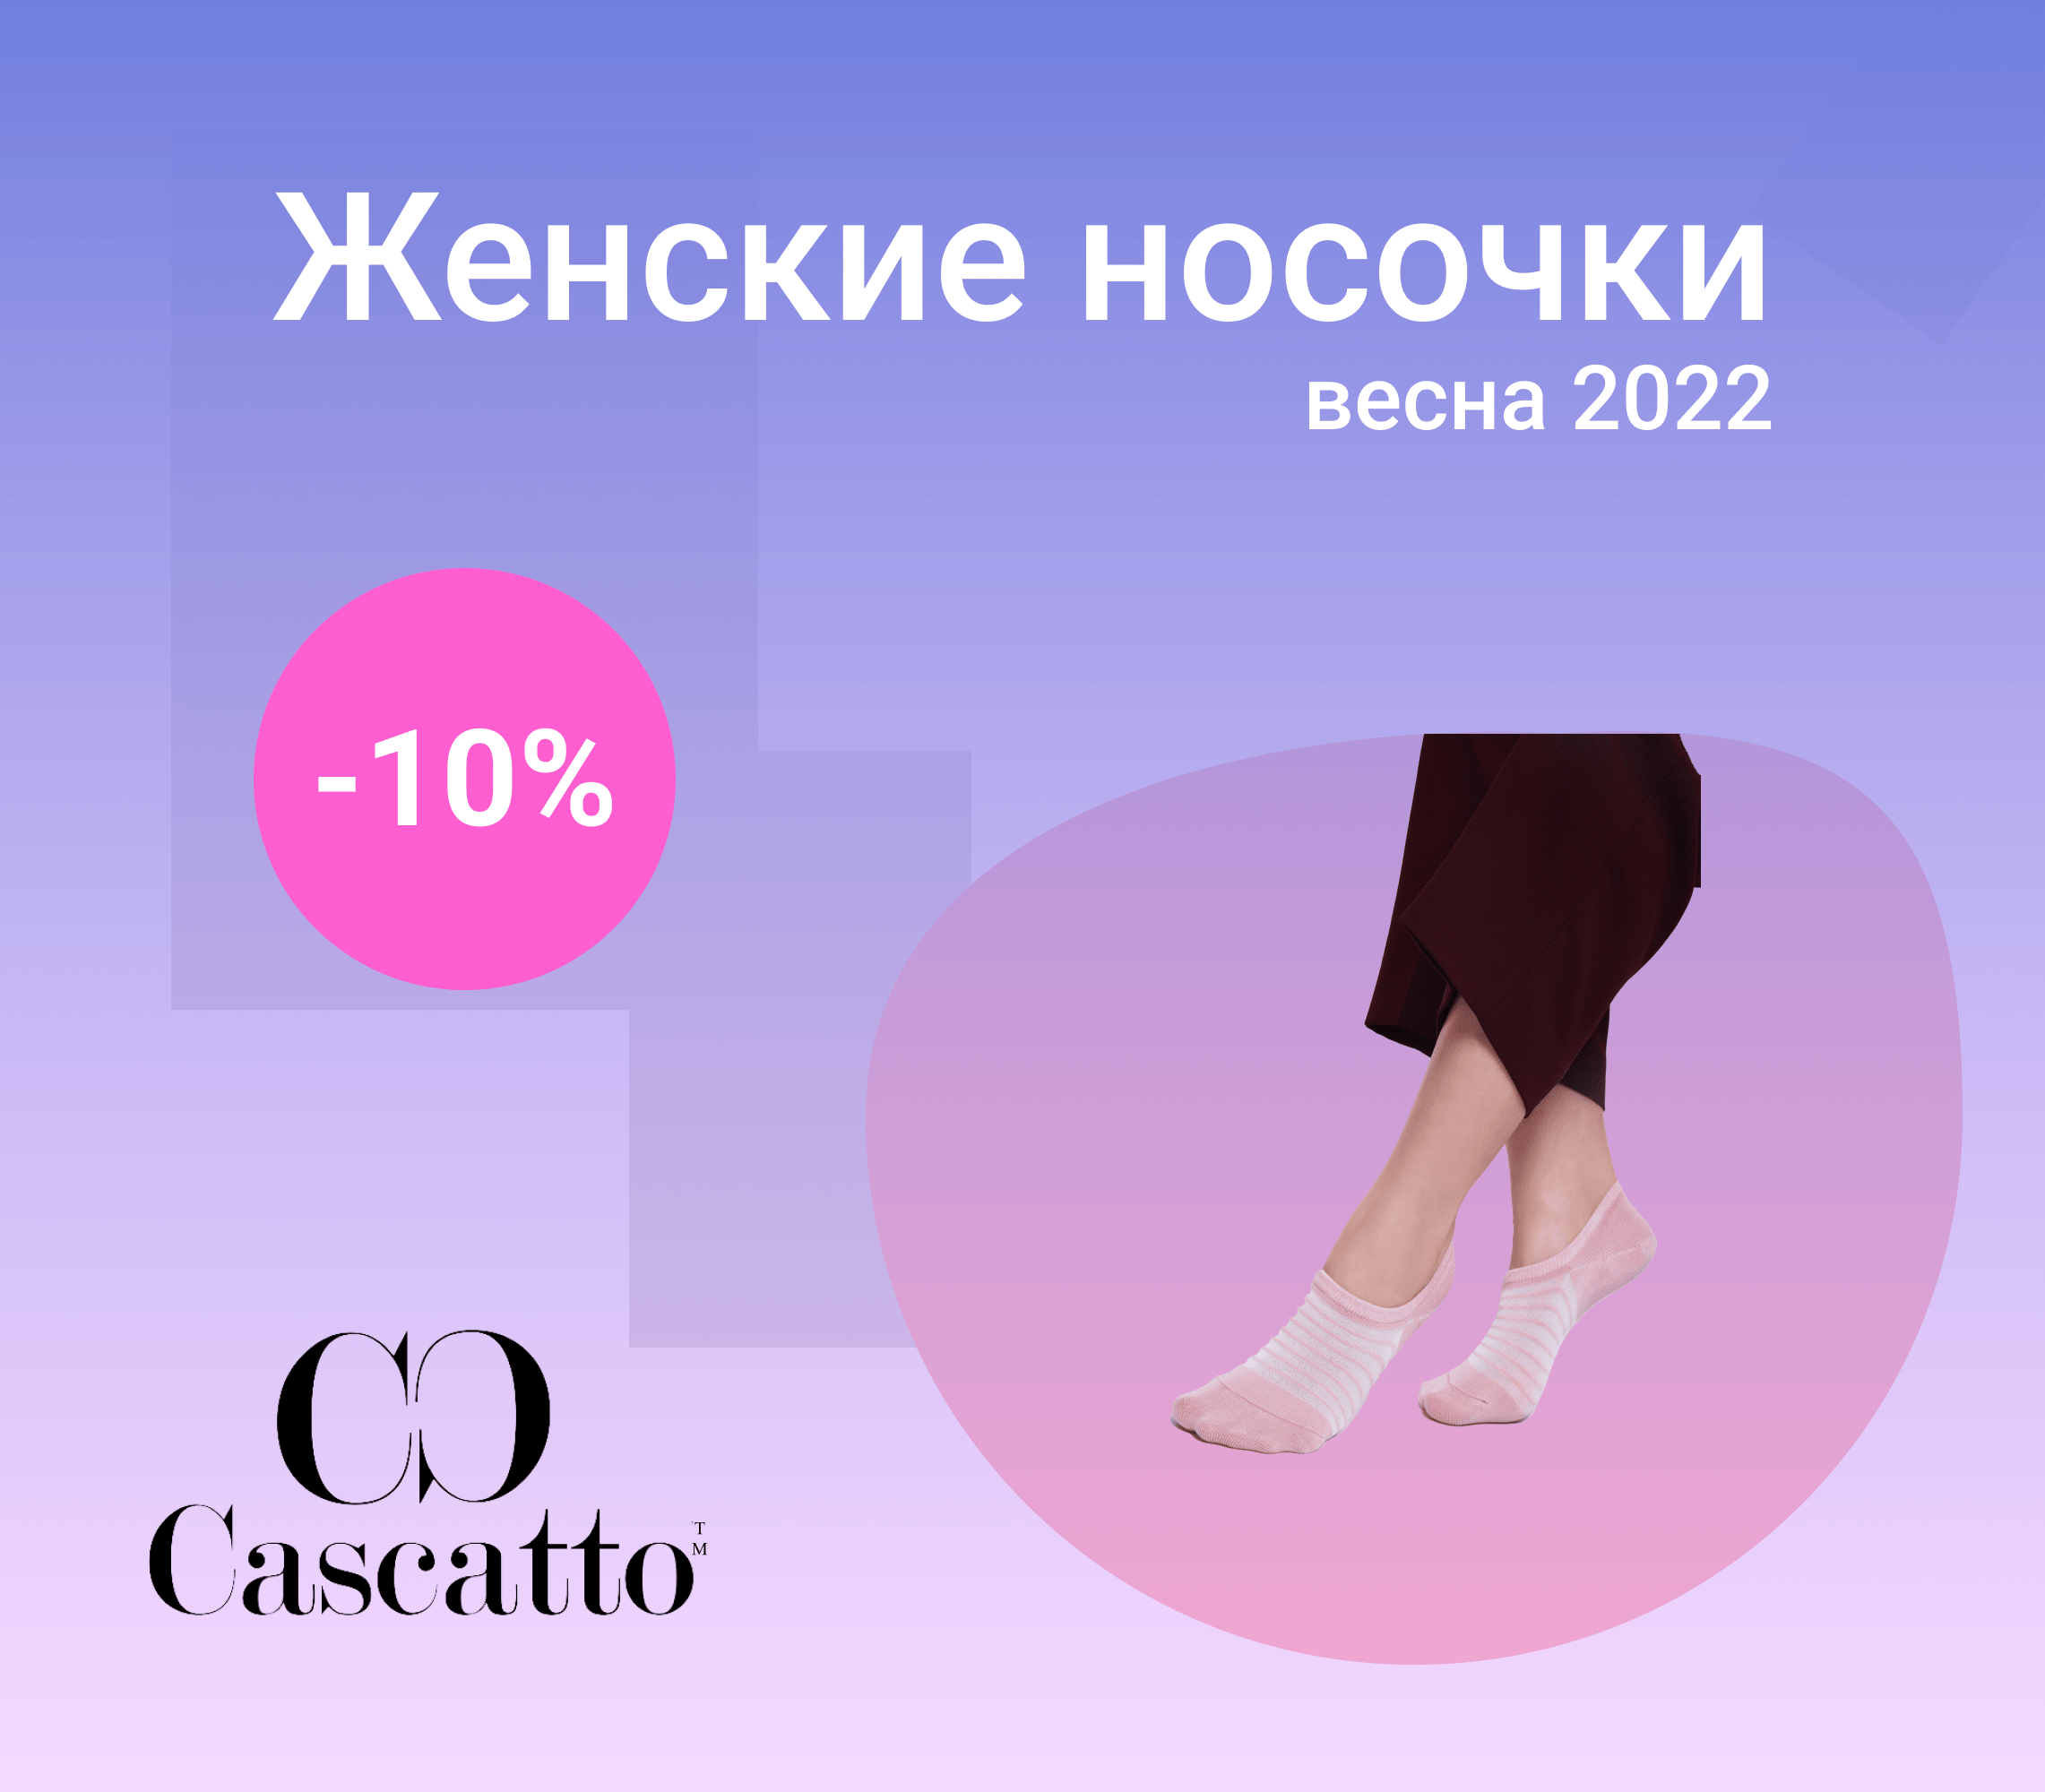 Распродажа Cascatto.ru